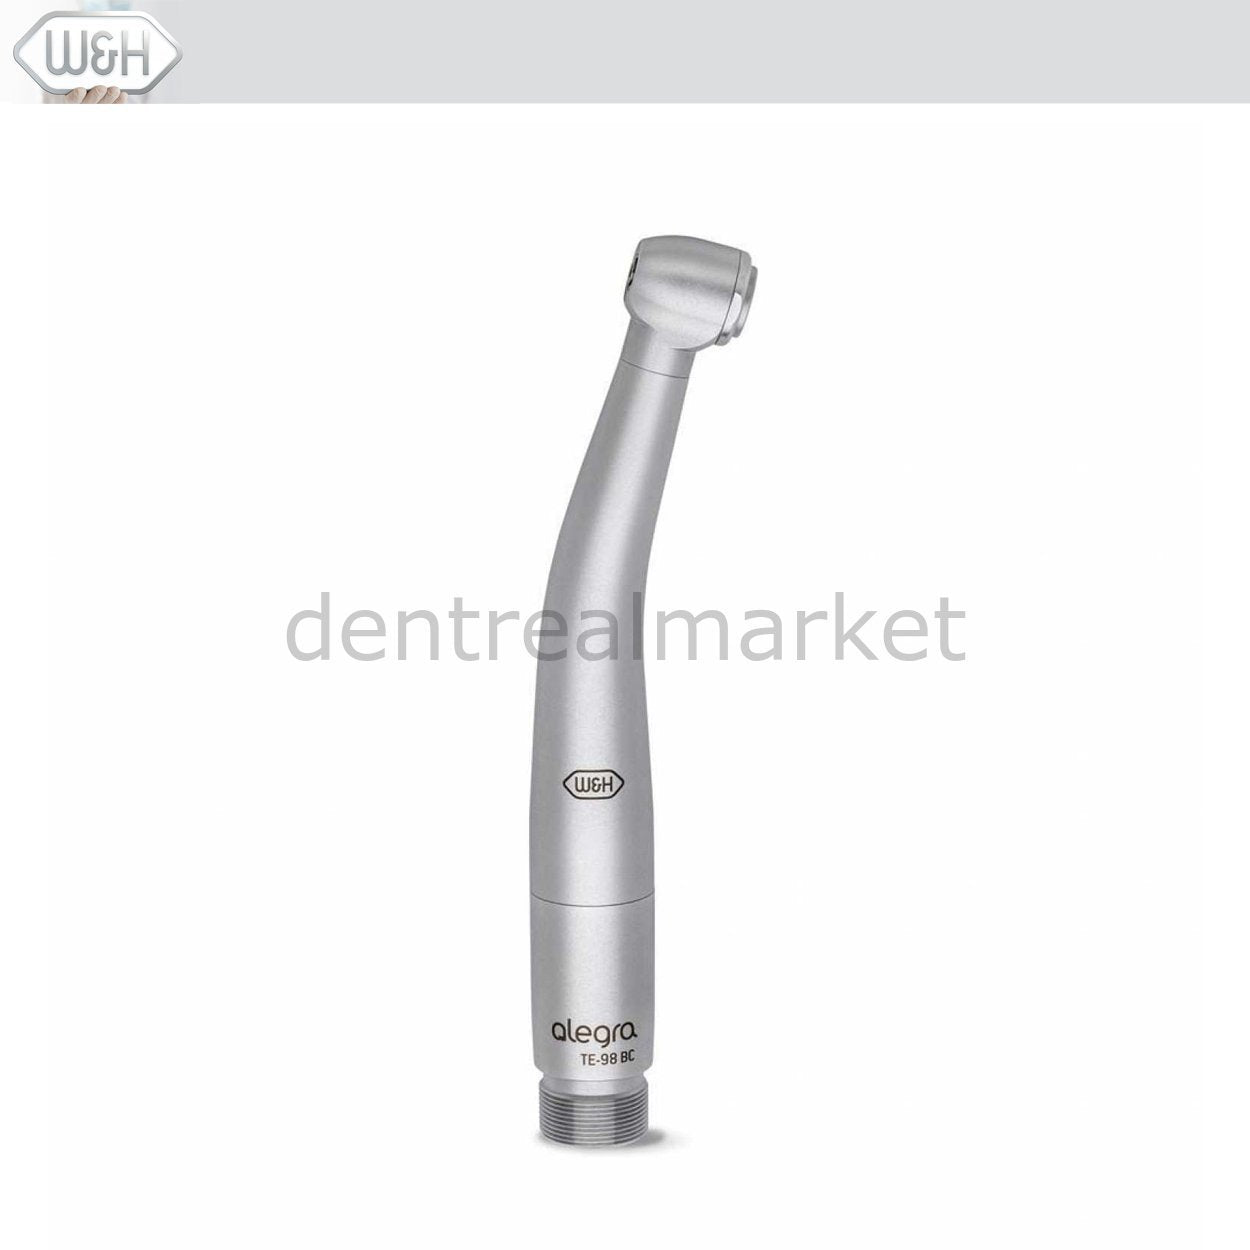 DentrealStore - W&H Dental Alegra Ceramic Bearing Turbine - TE-98BC - Borden Connection